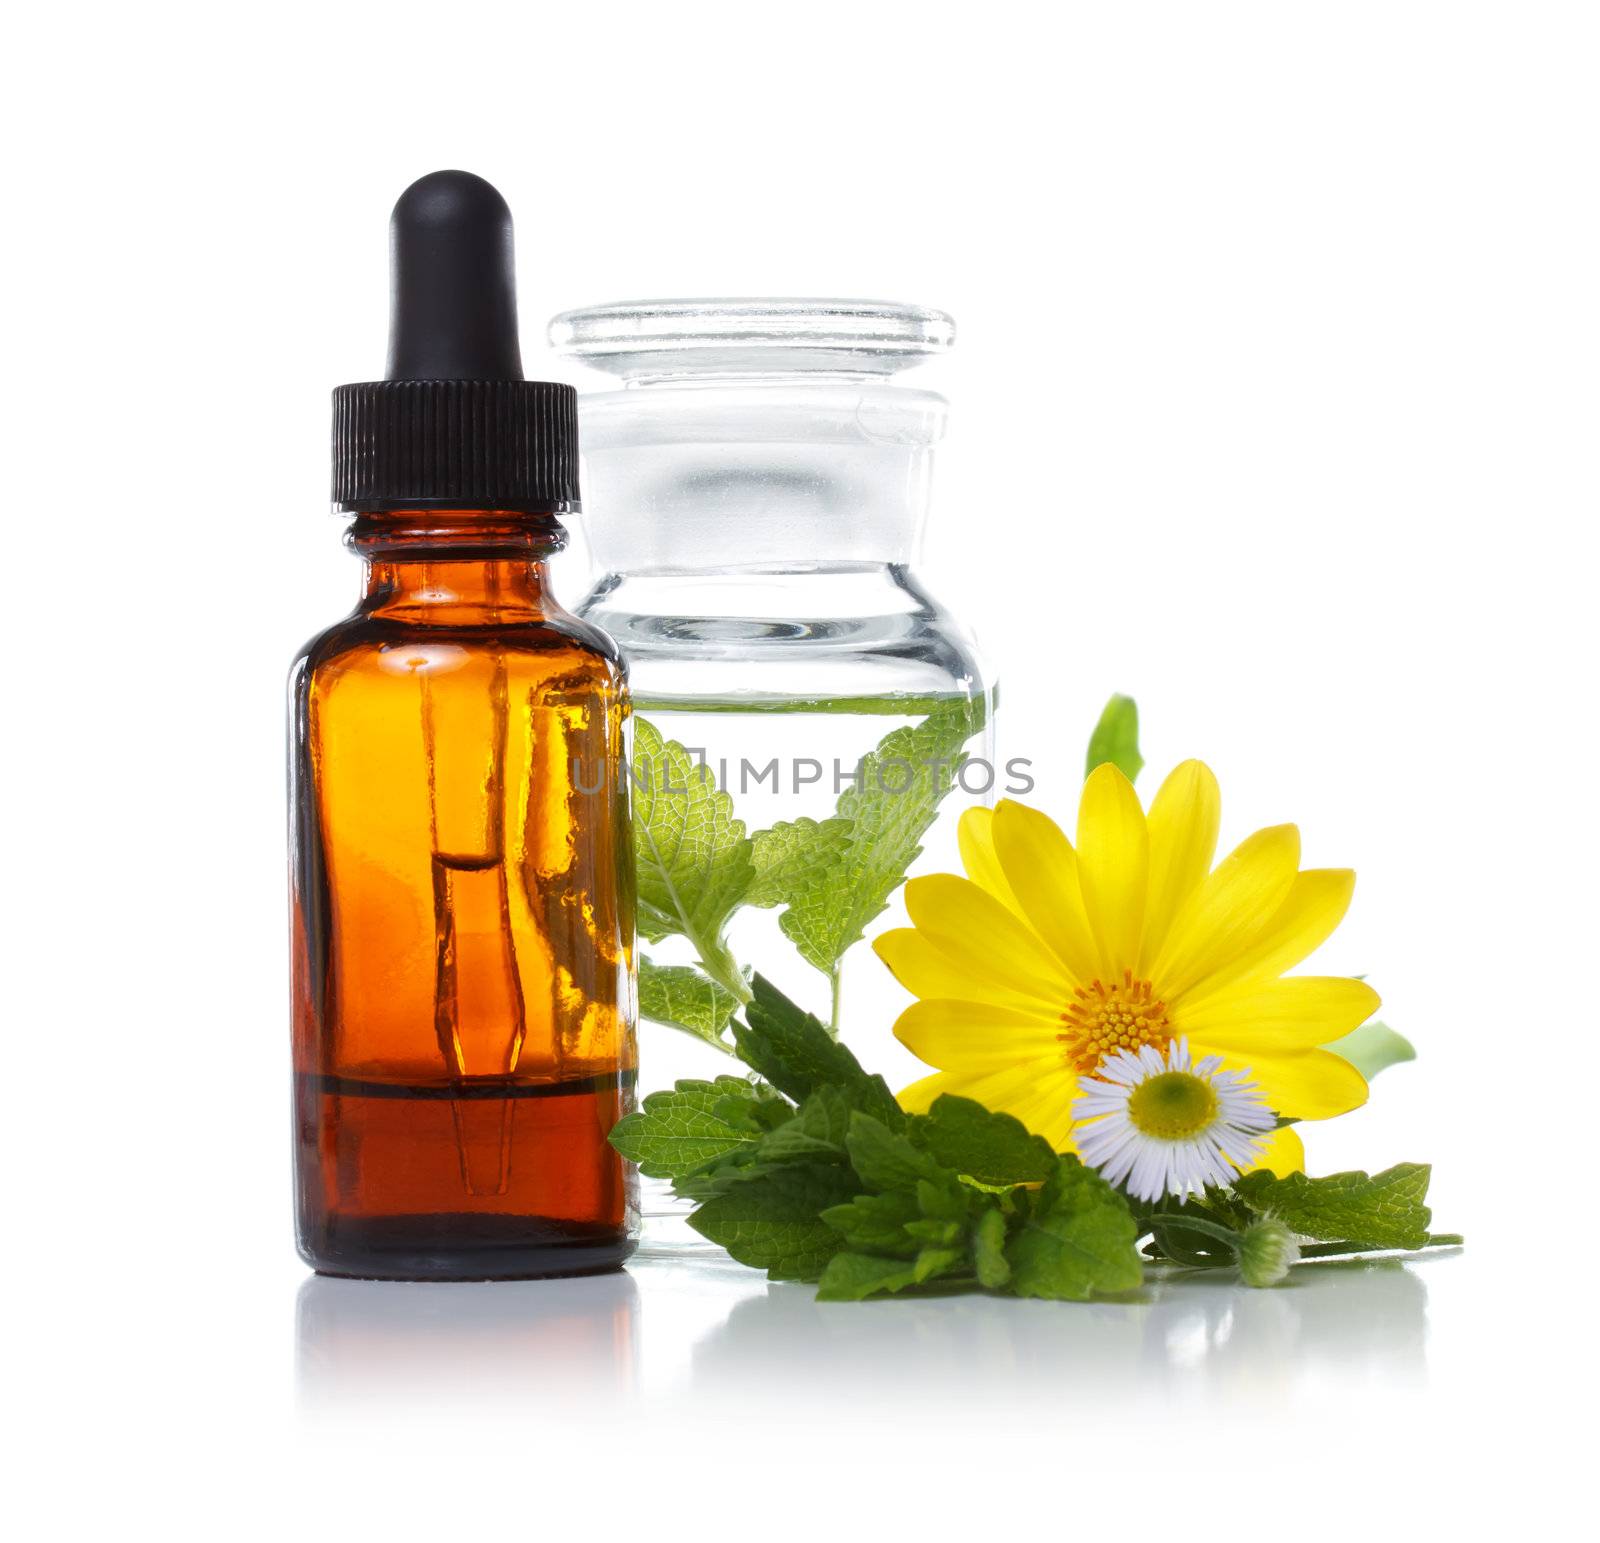 Herbal medicine or aromatherapy dropper bottle by melpomene